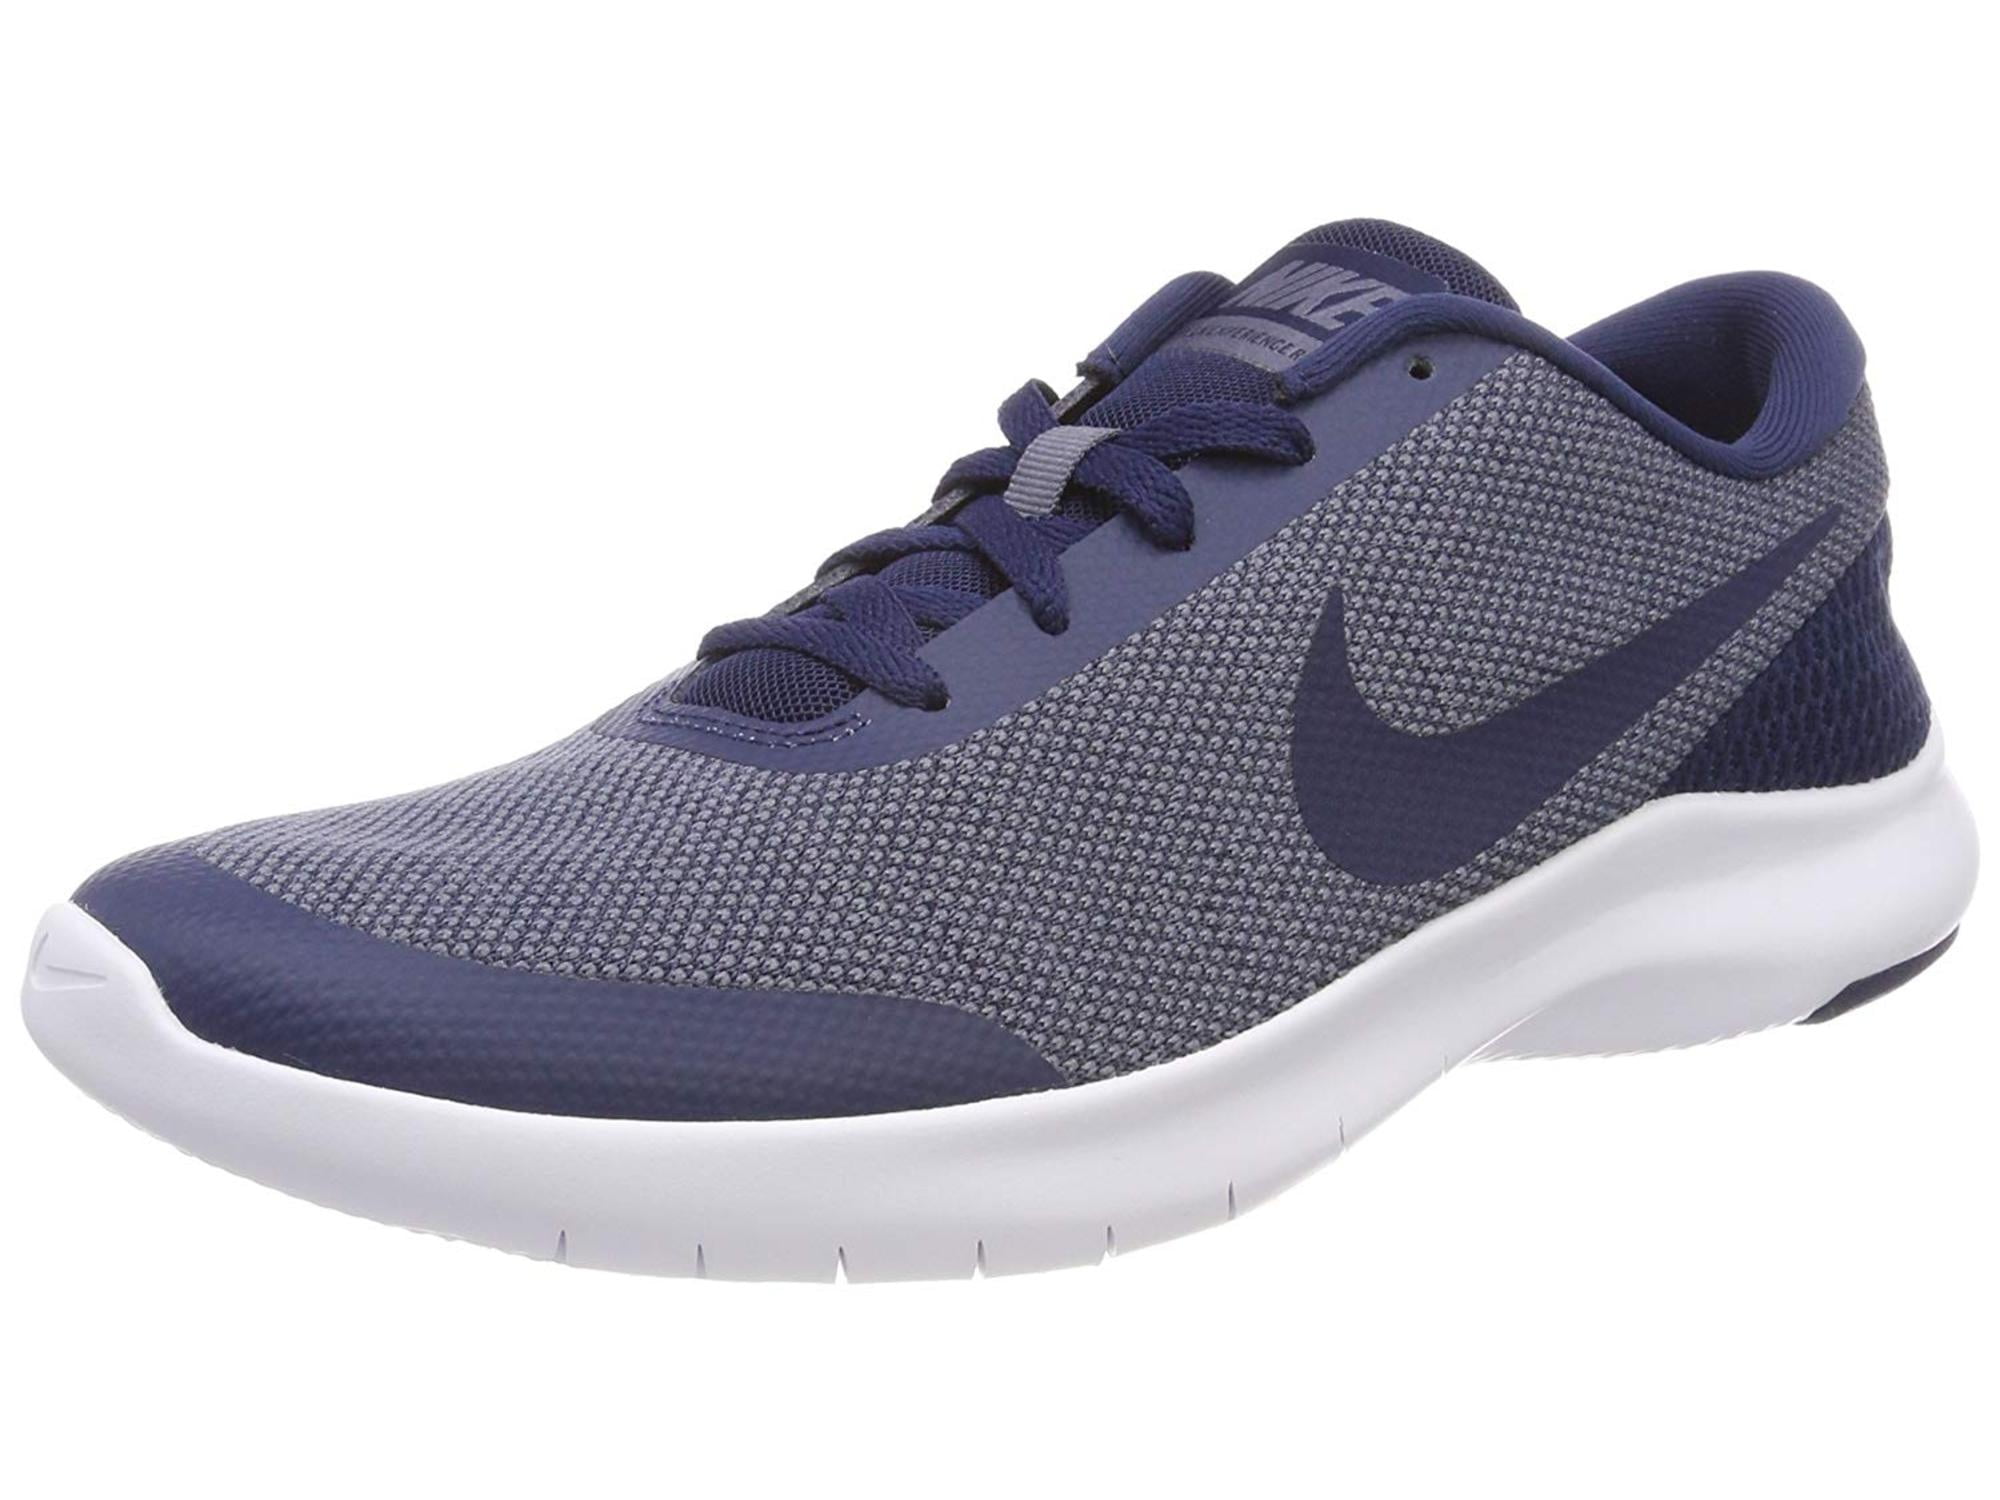 Nike Men's Flex Experience Run 7 Shoe - Walmart.com